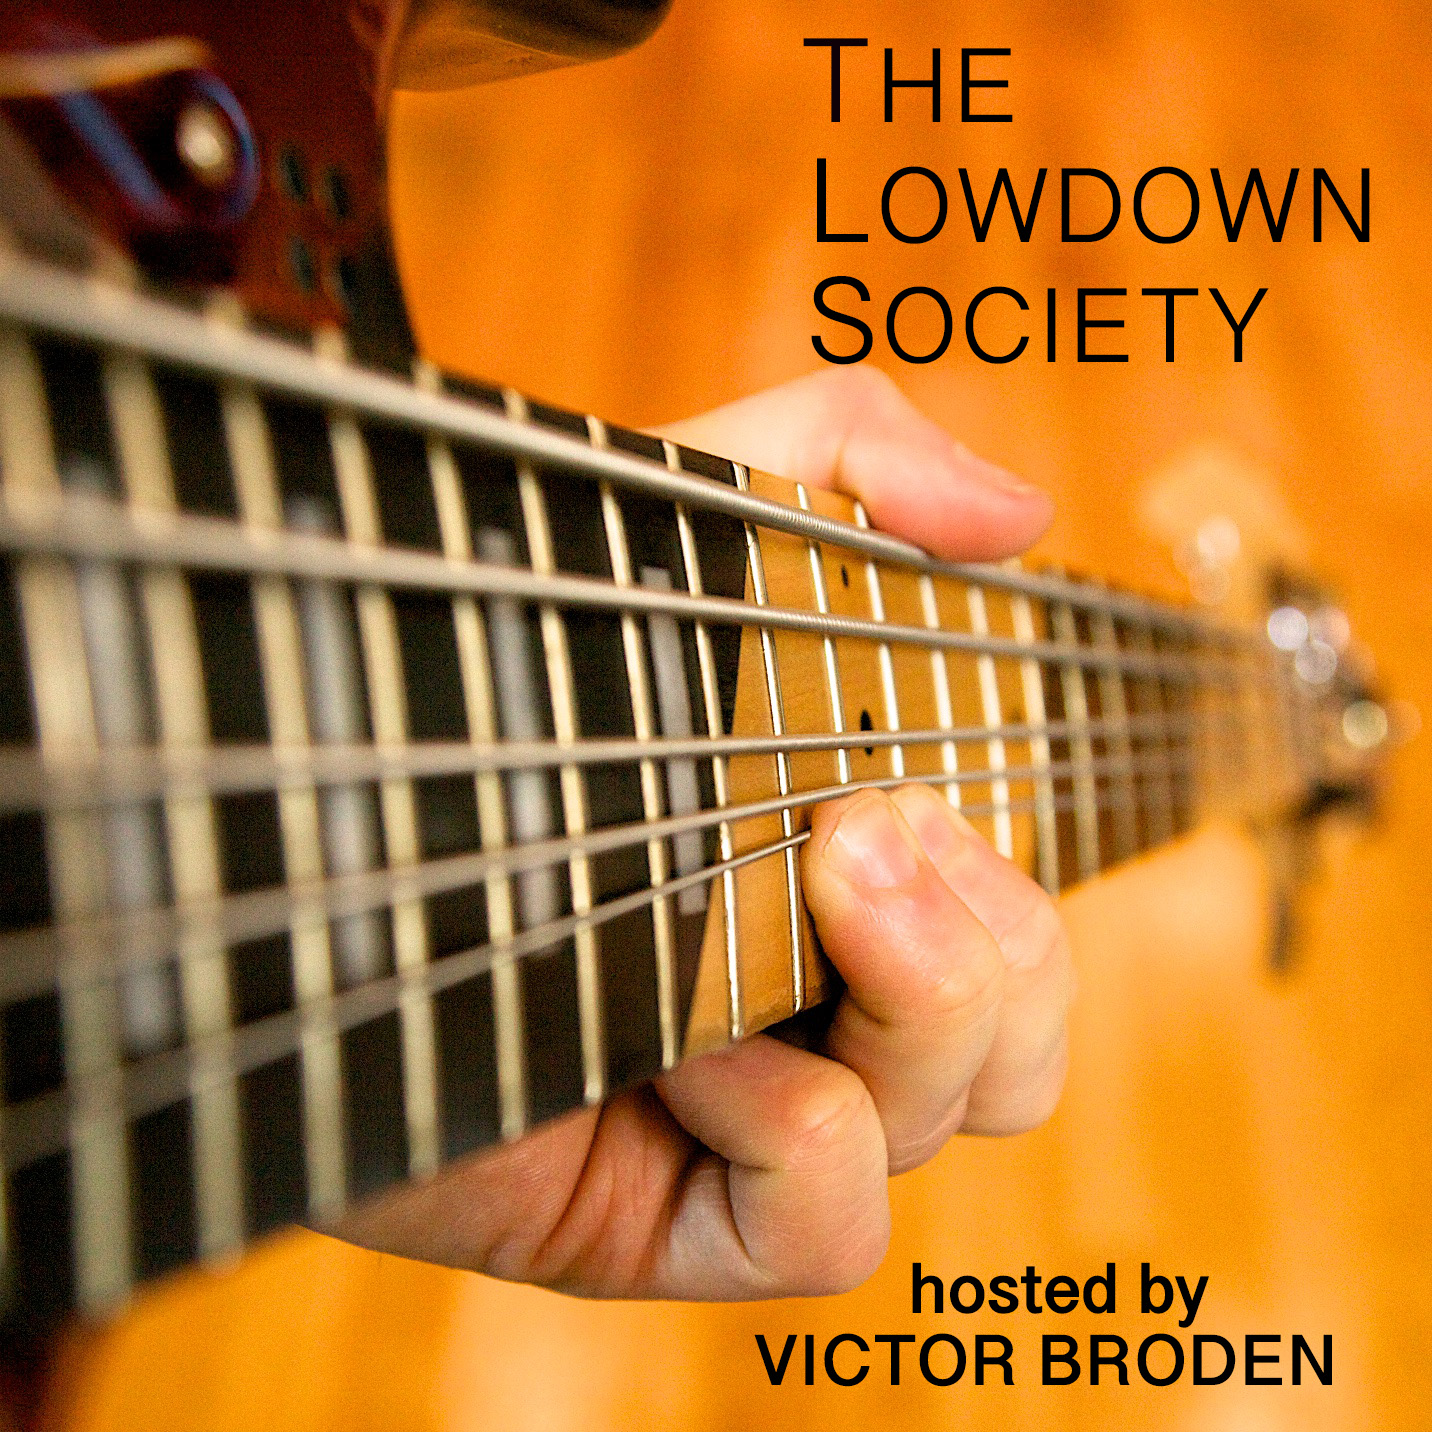 The Lowdown Society Podcast